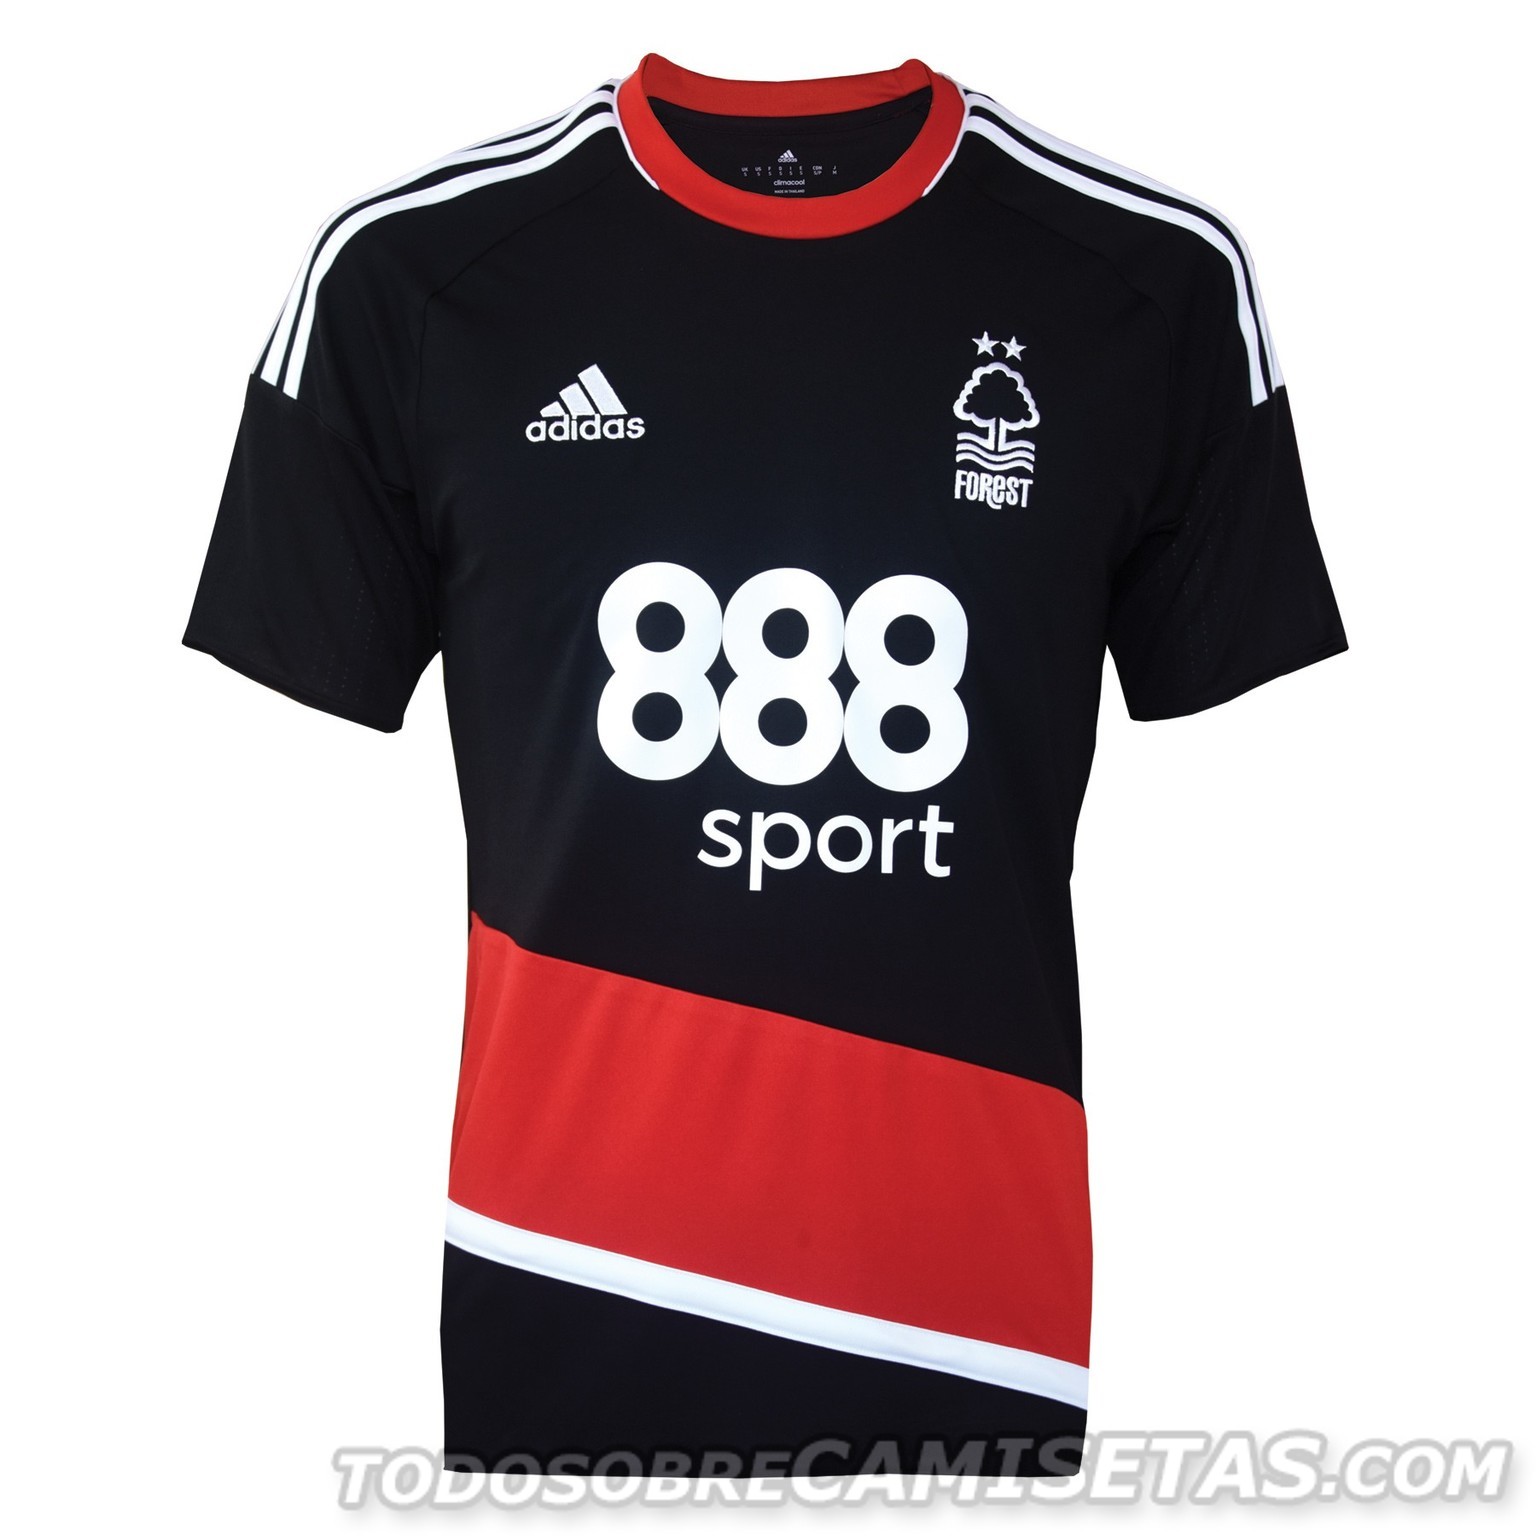 Nottingham Forest FC adidas 2016-17 Away Kit